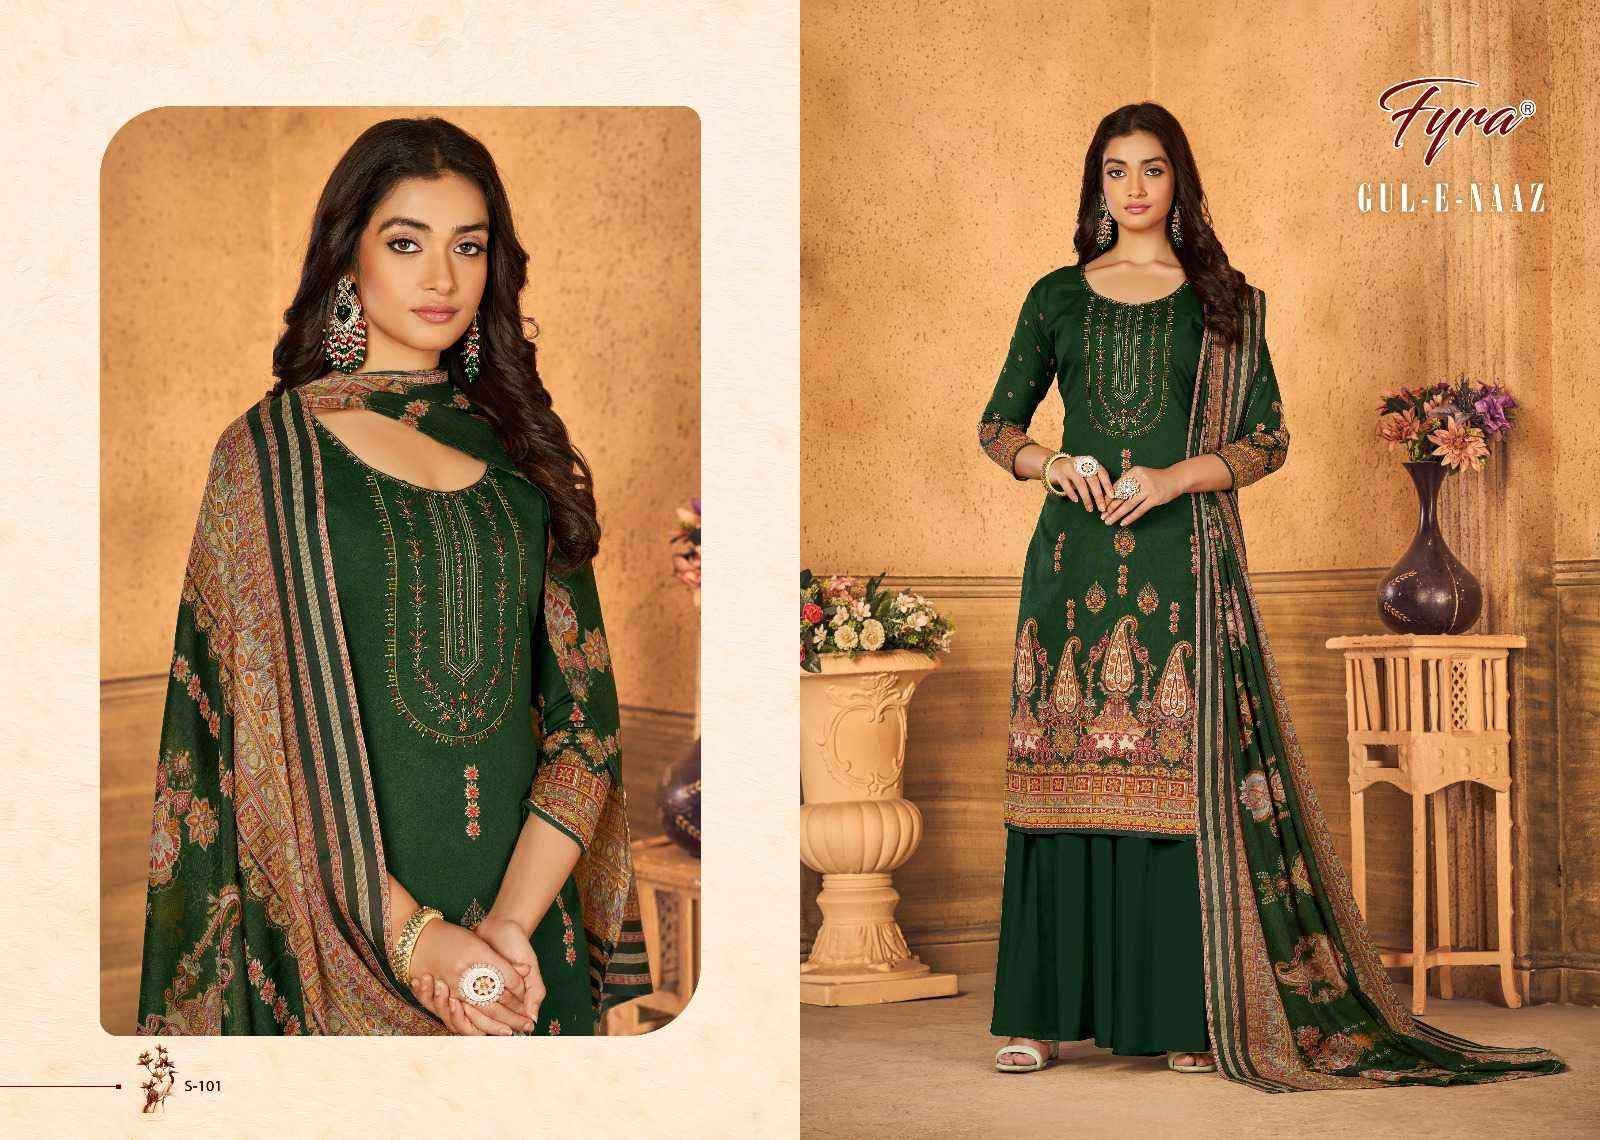 Fyra Designing Hub Gul-E-Naaz Cotton Dress Material 10 pcs Catalogue